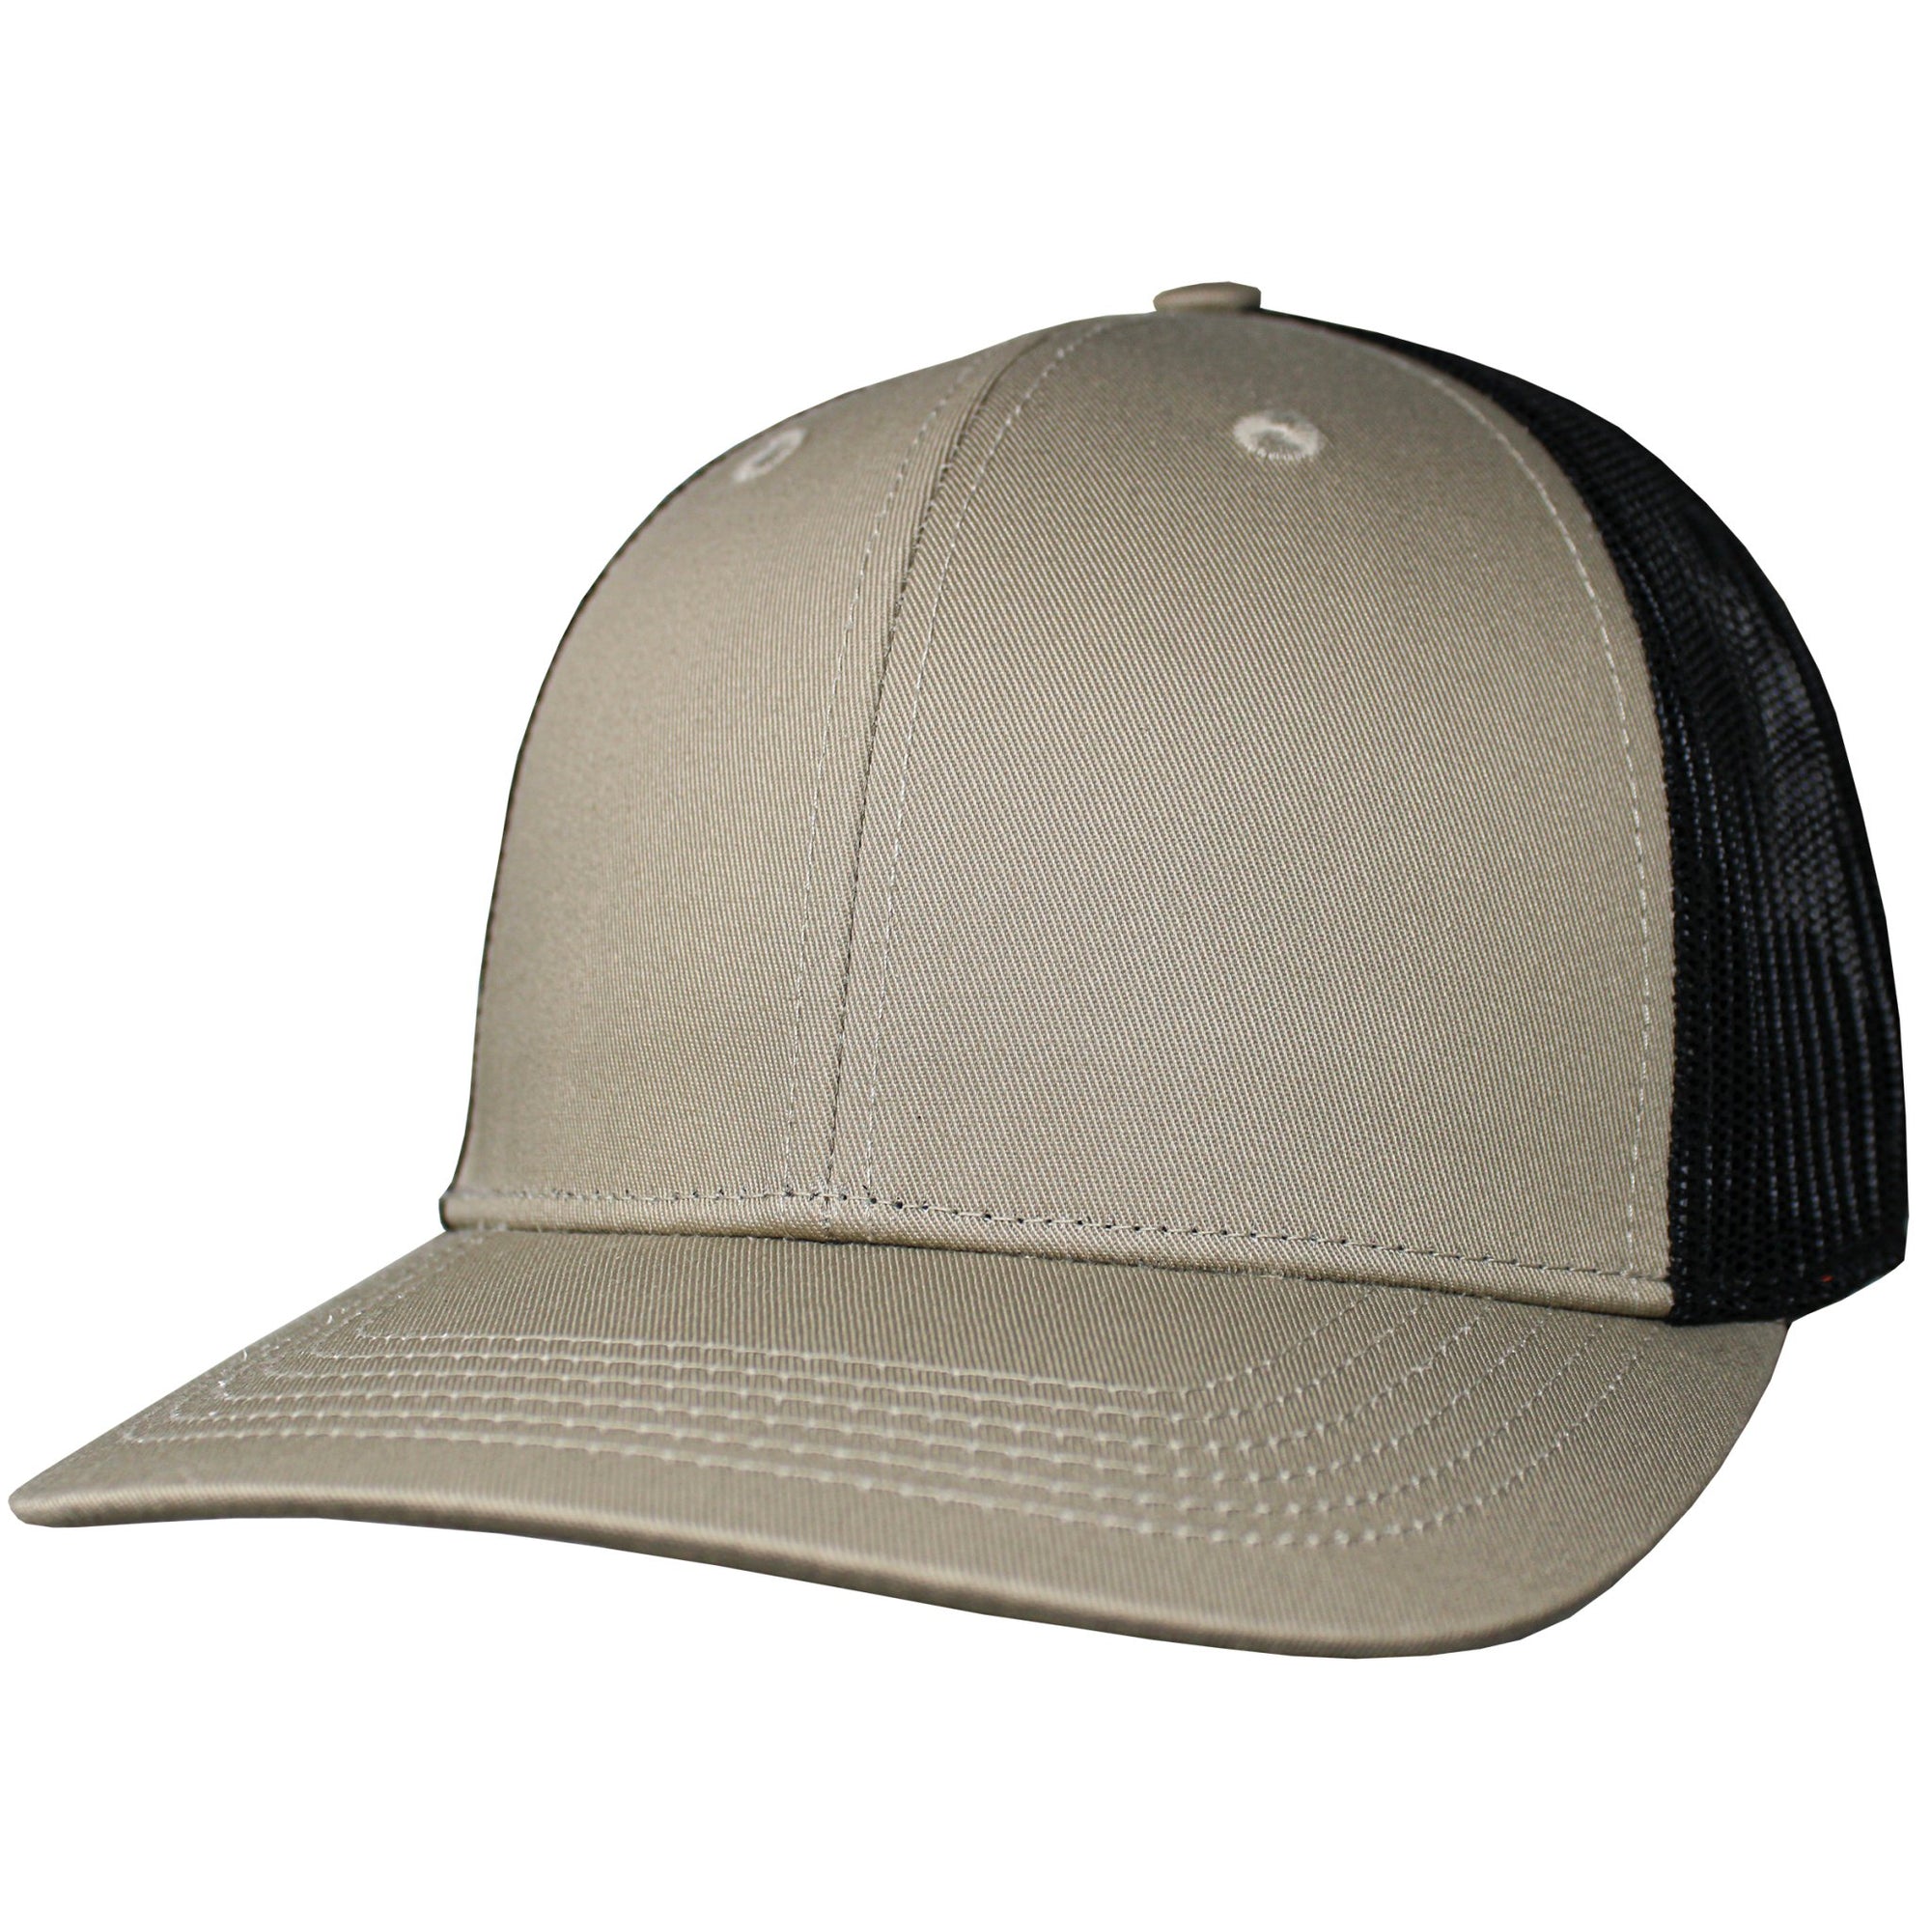 Blank Headwear - BC23 / 6 Panel Performance Trucker Cap - Khaki / Black - Black Cat MFG - Hat